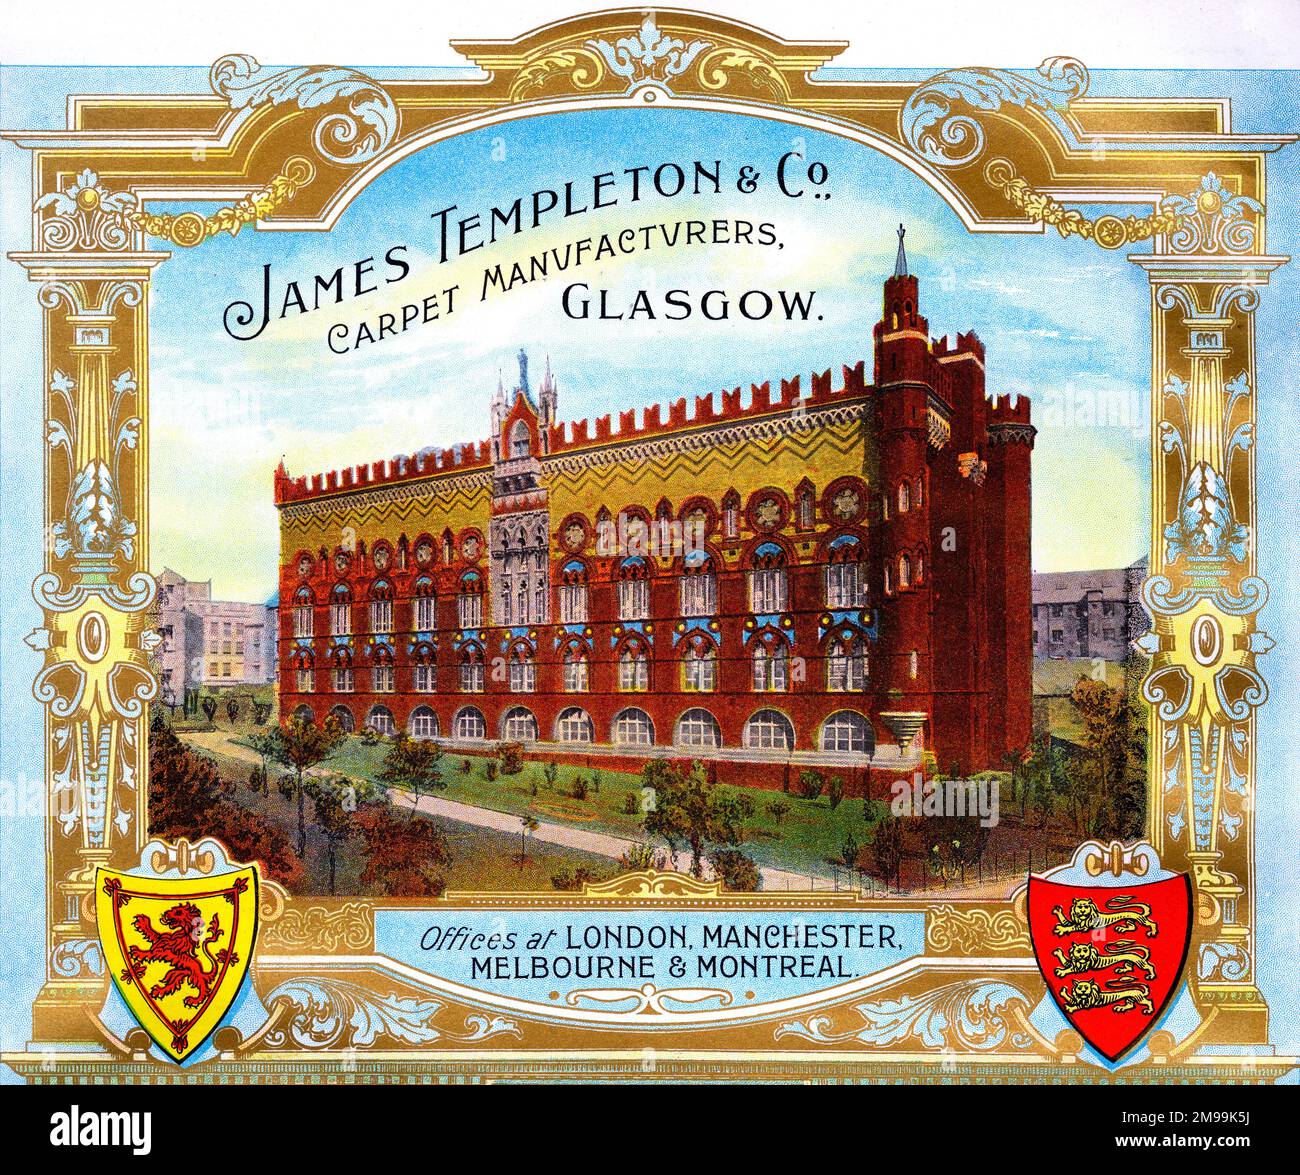 Advert for James Templeton & Co, Carpet Manufacturers, Glasgow, Scotland. Stock Photo